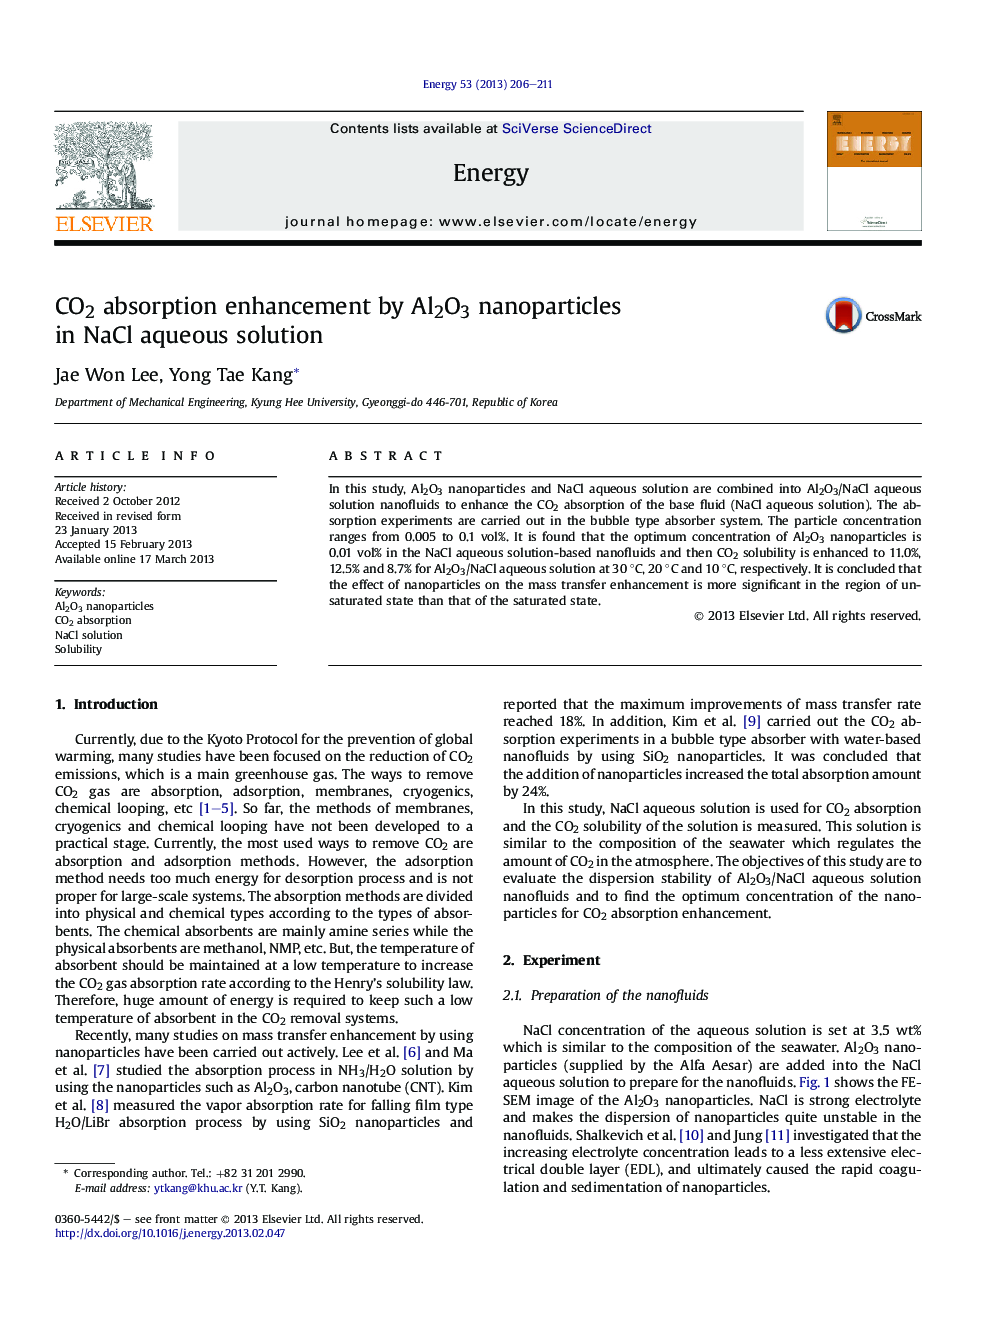 CO2 absorption enhancement by Al2O3 nanoparticles in NaCl aqueous solution